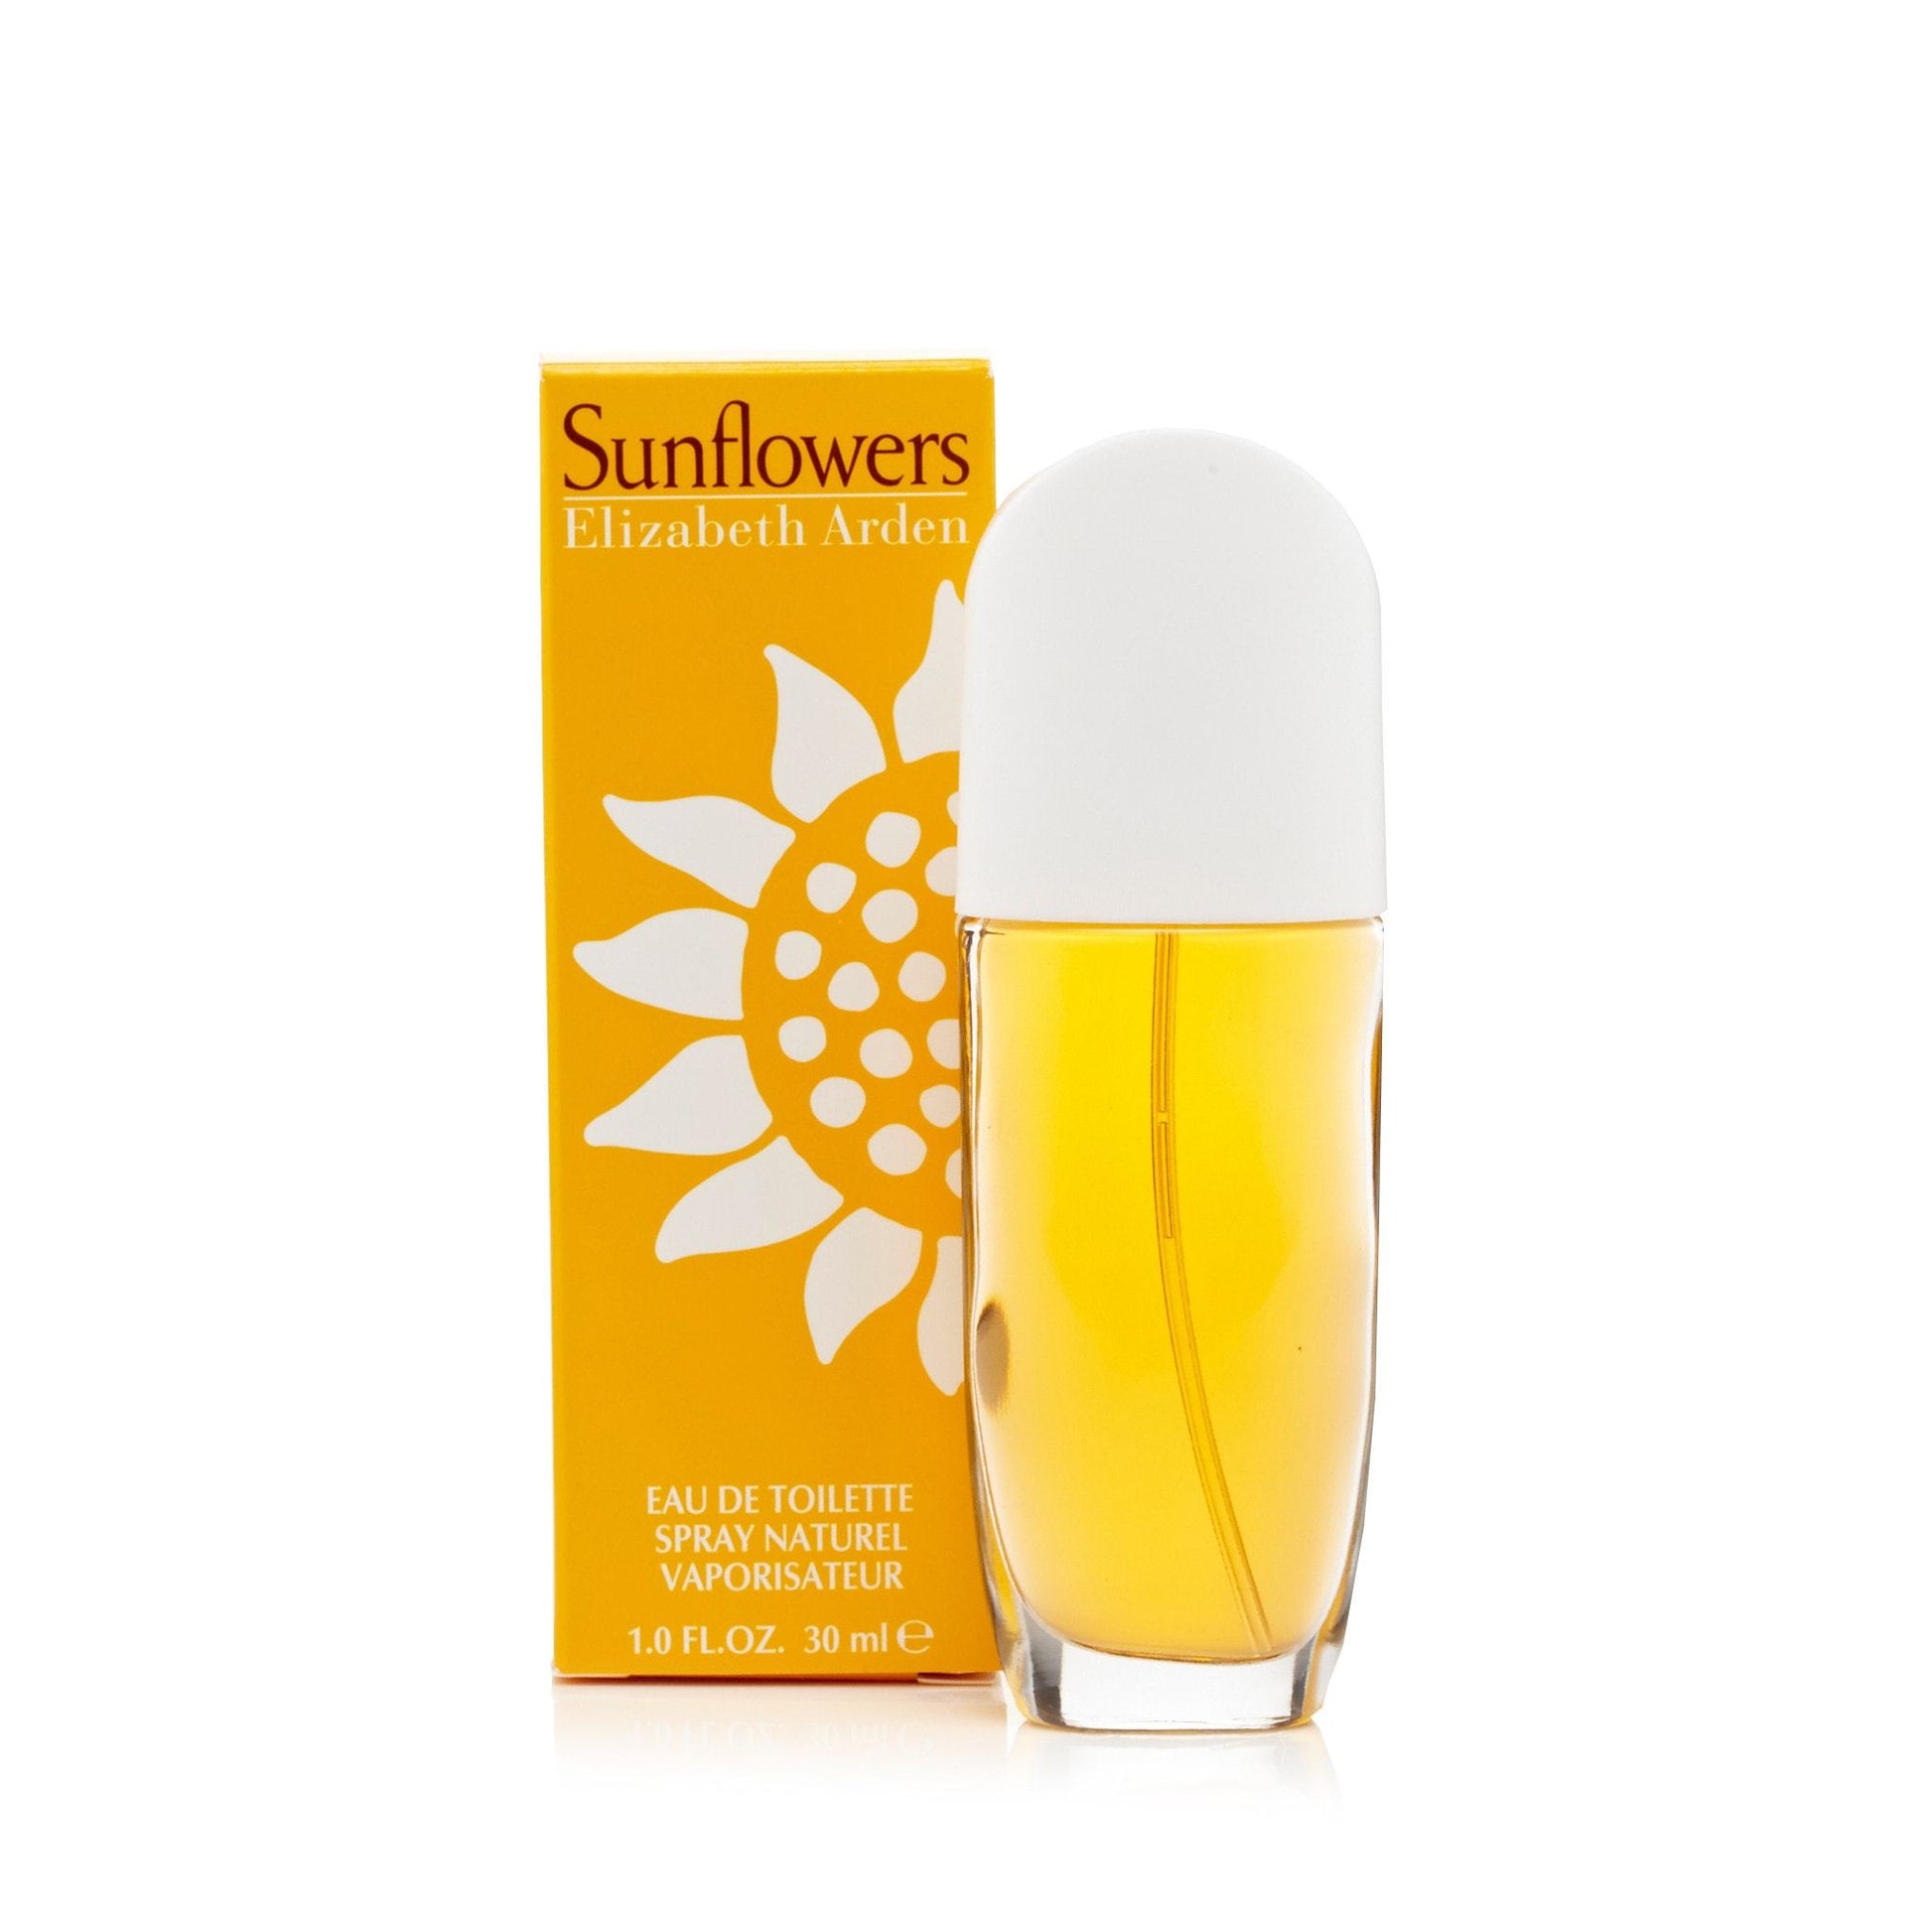 Sunflowers Eau de Toilette Spray for Women by Elizabeth Arden, Product image 5